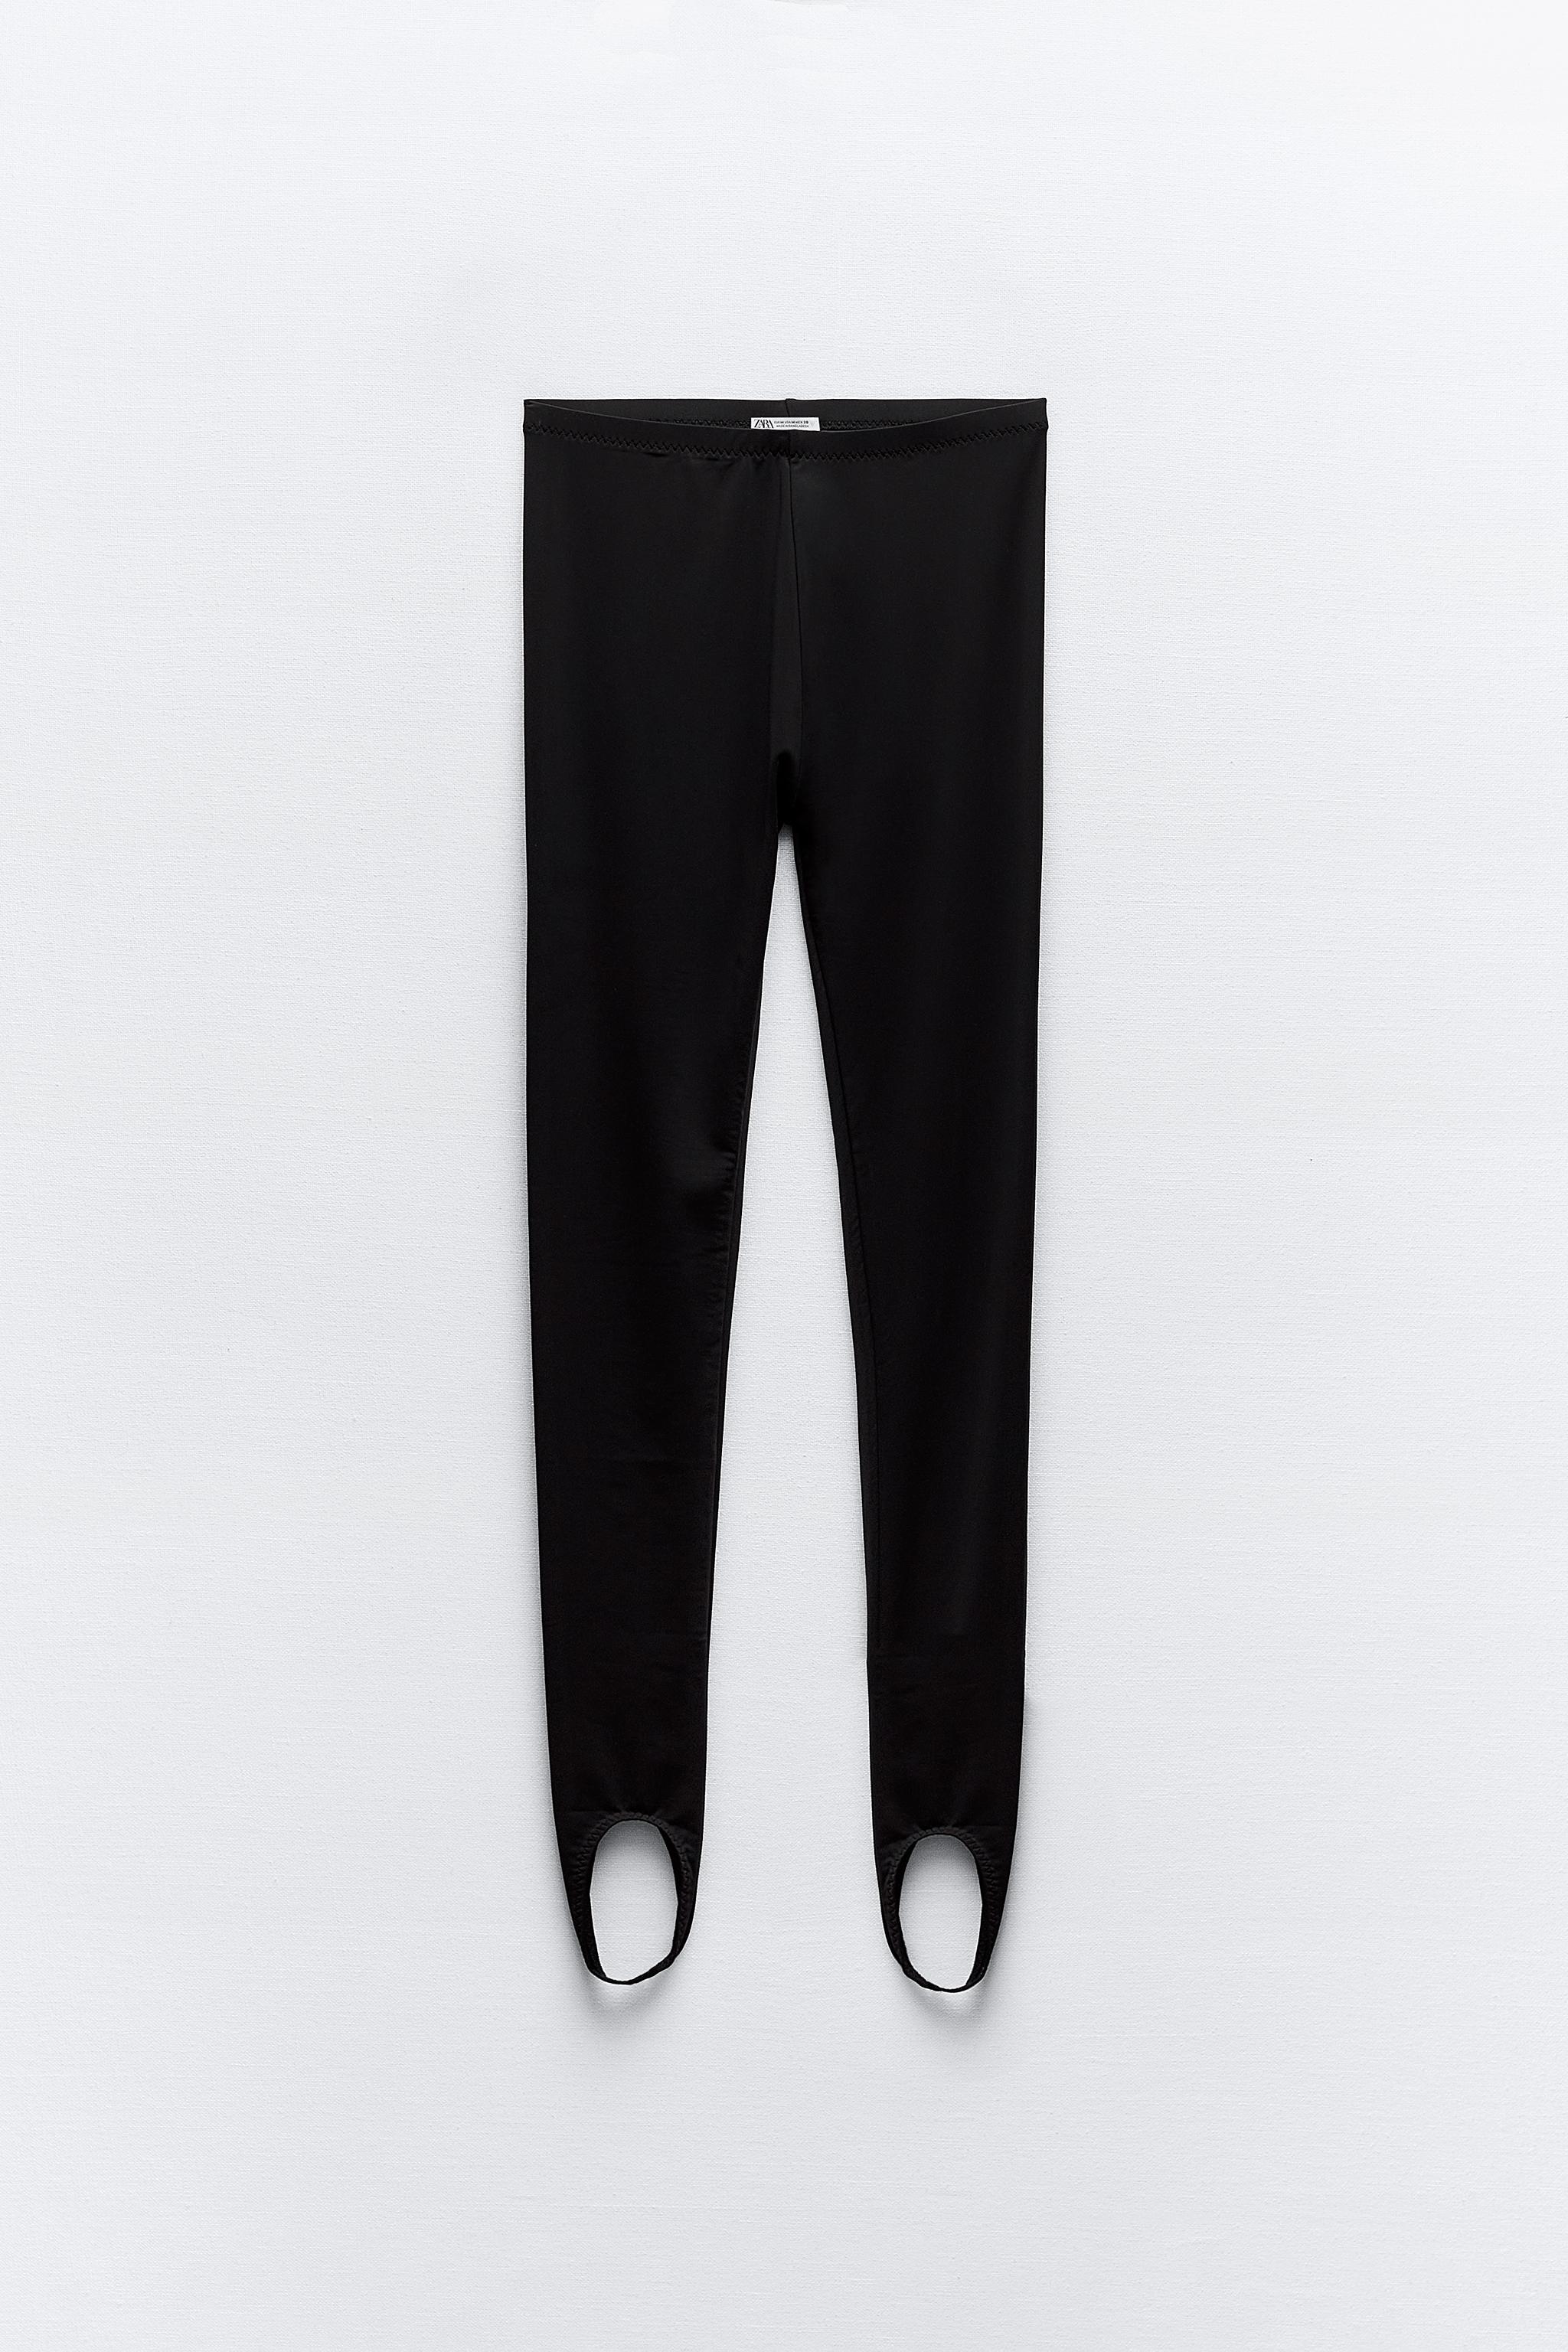 Bitte Kai Rand Pants, leggings Black Polyester Elastane Polyamide